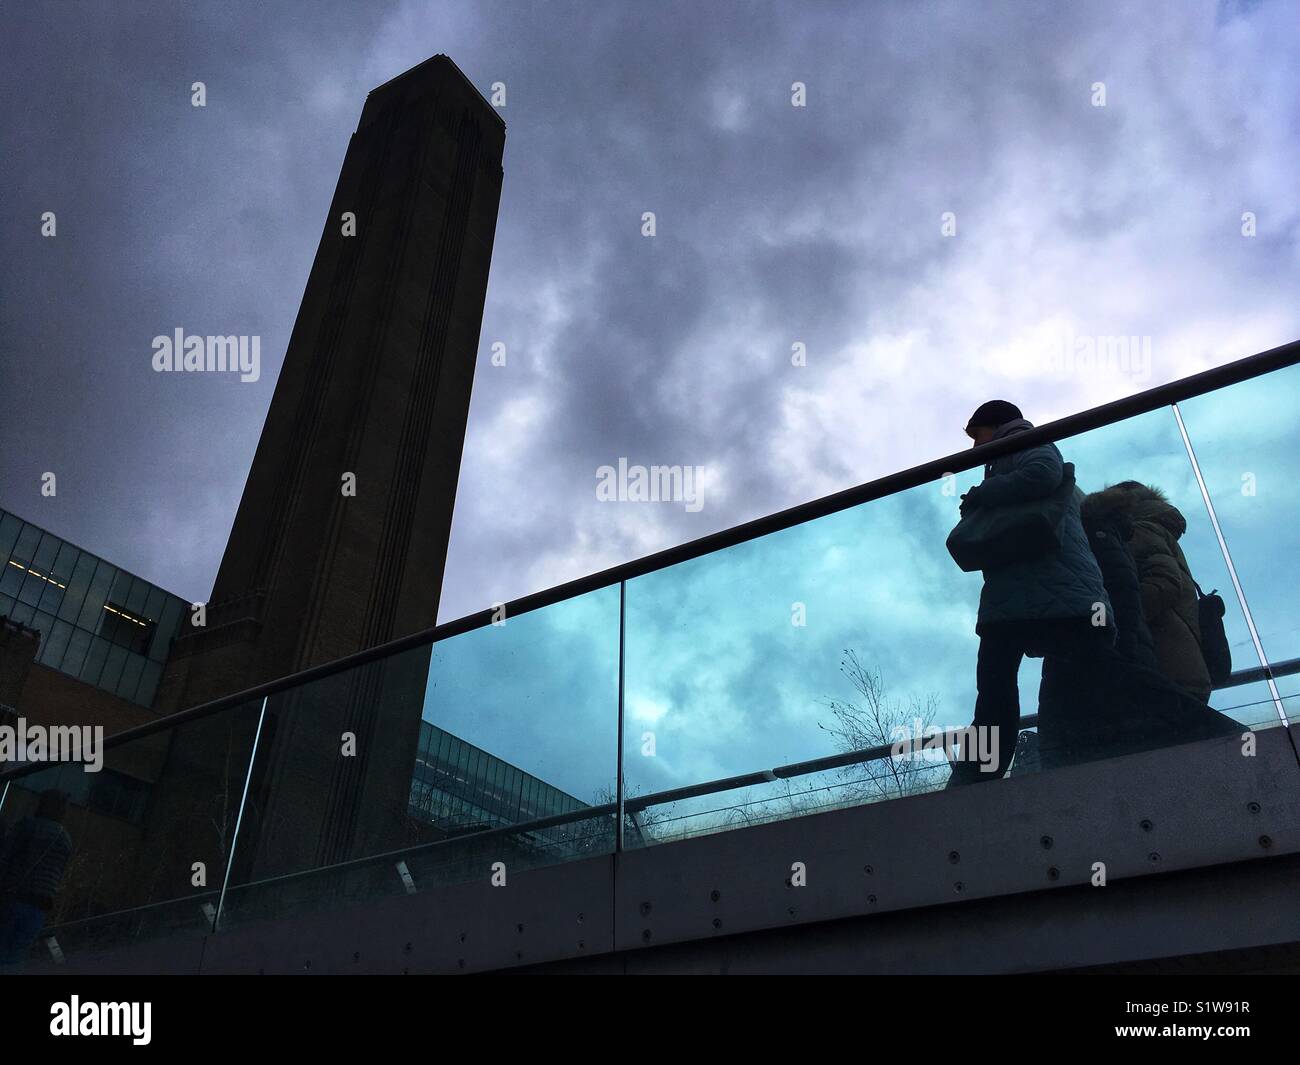 People walk across the Millennium Bridge by Tate Modern in London, England on January 1 2018 Stock Photo